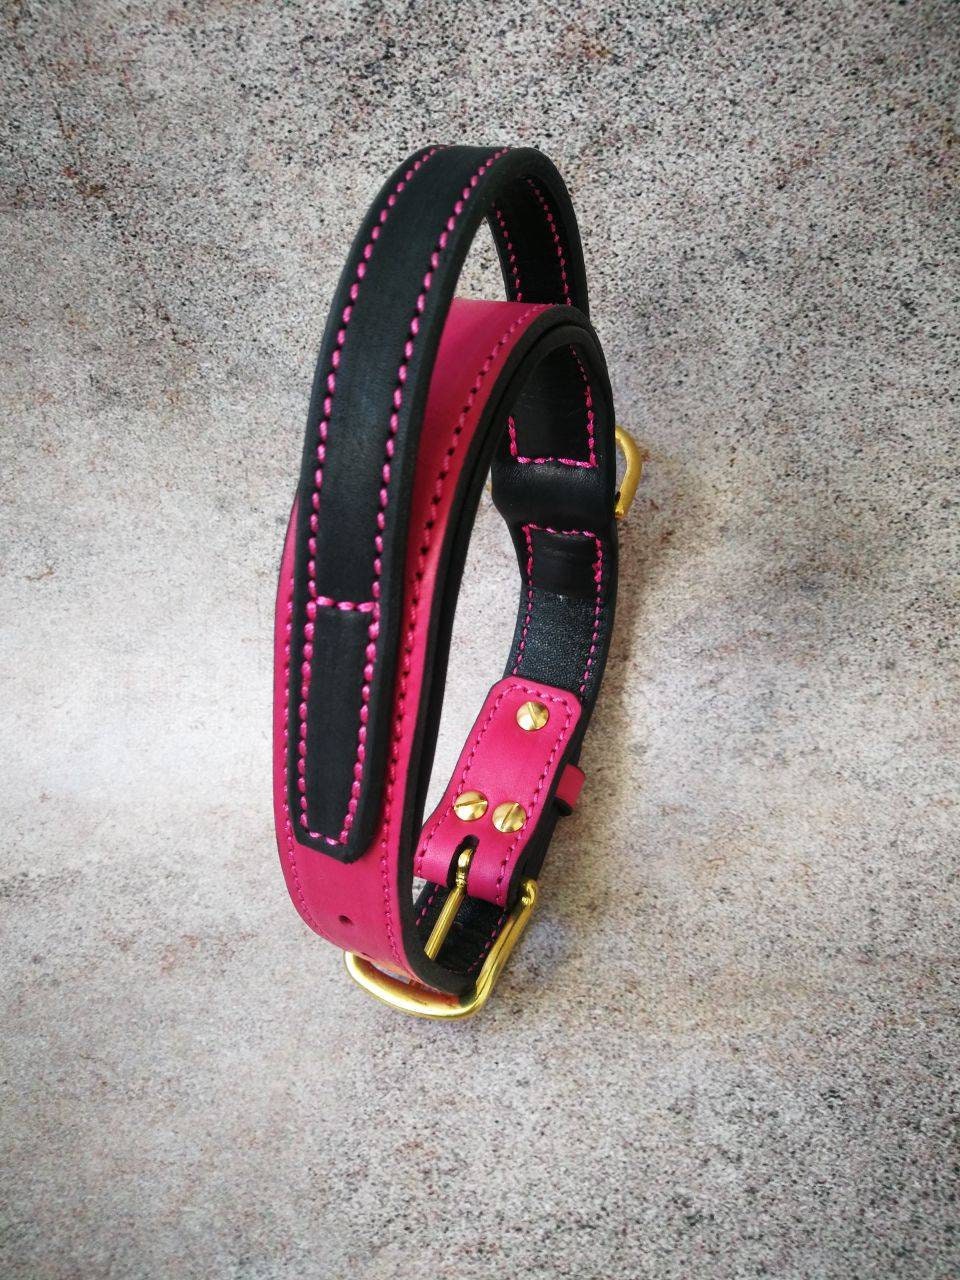 Leather Dog Collar with Handle, Pink Dog Collar, Pink Leather Dog Collar, Handle Dog Collar, Stylish Dog Collar, Tracking Walking Dog Collar